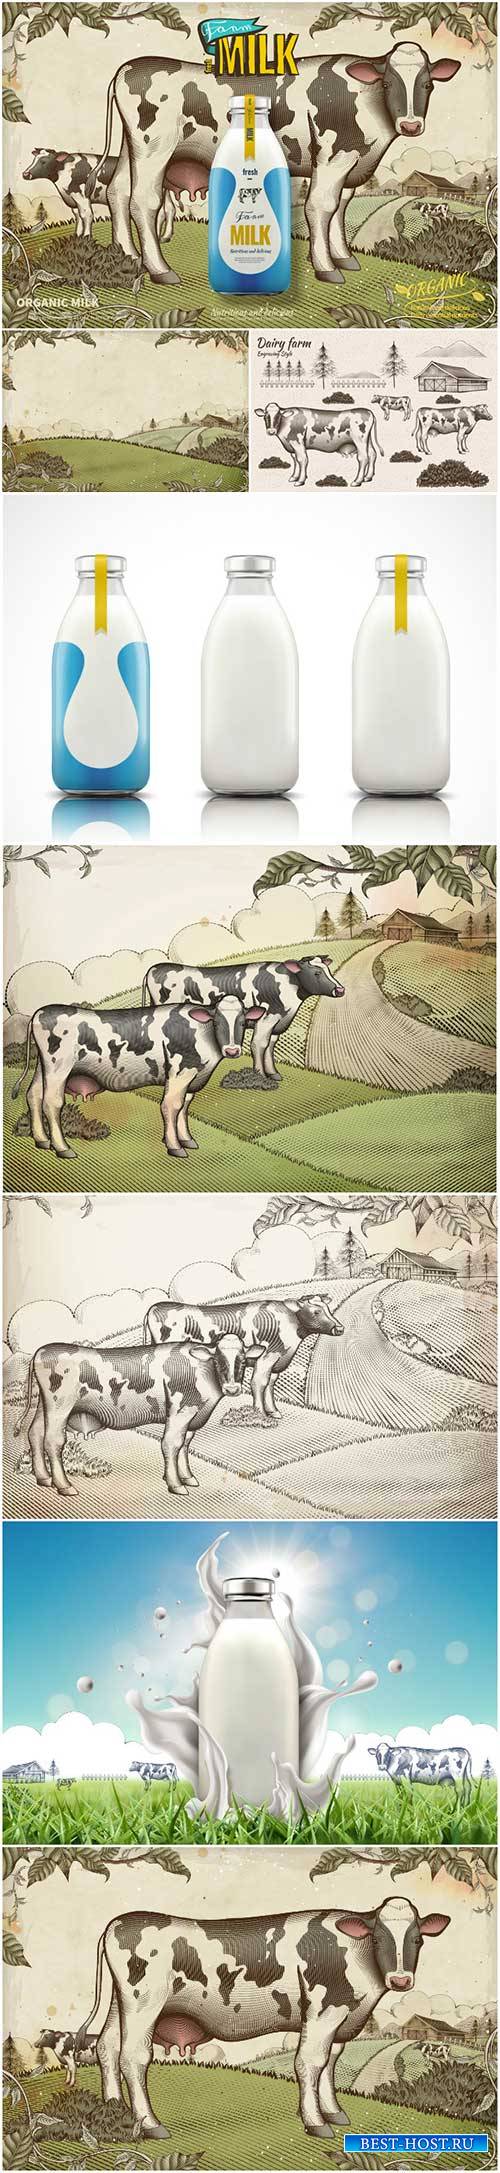 Farm fresh milk in 3d illustration on retro engraved farmland and dairy cat ...